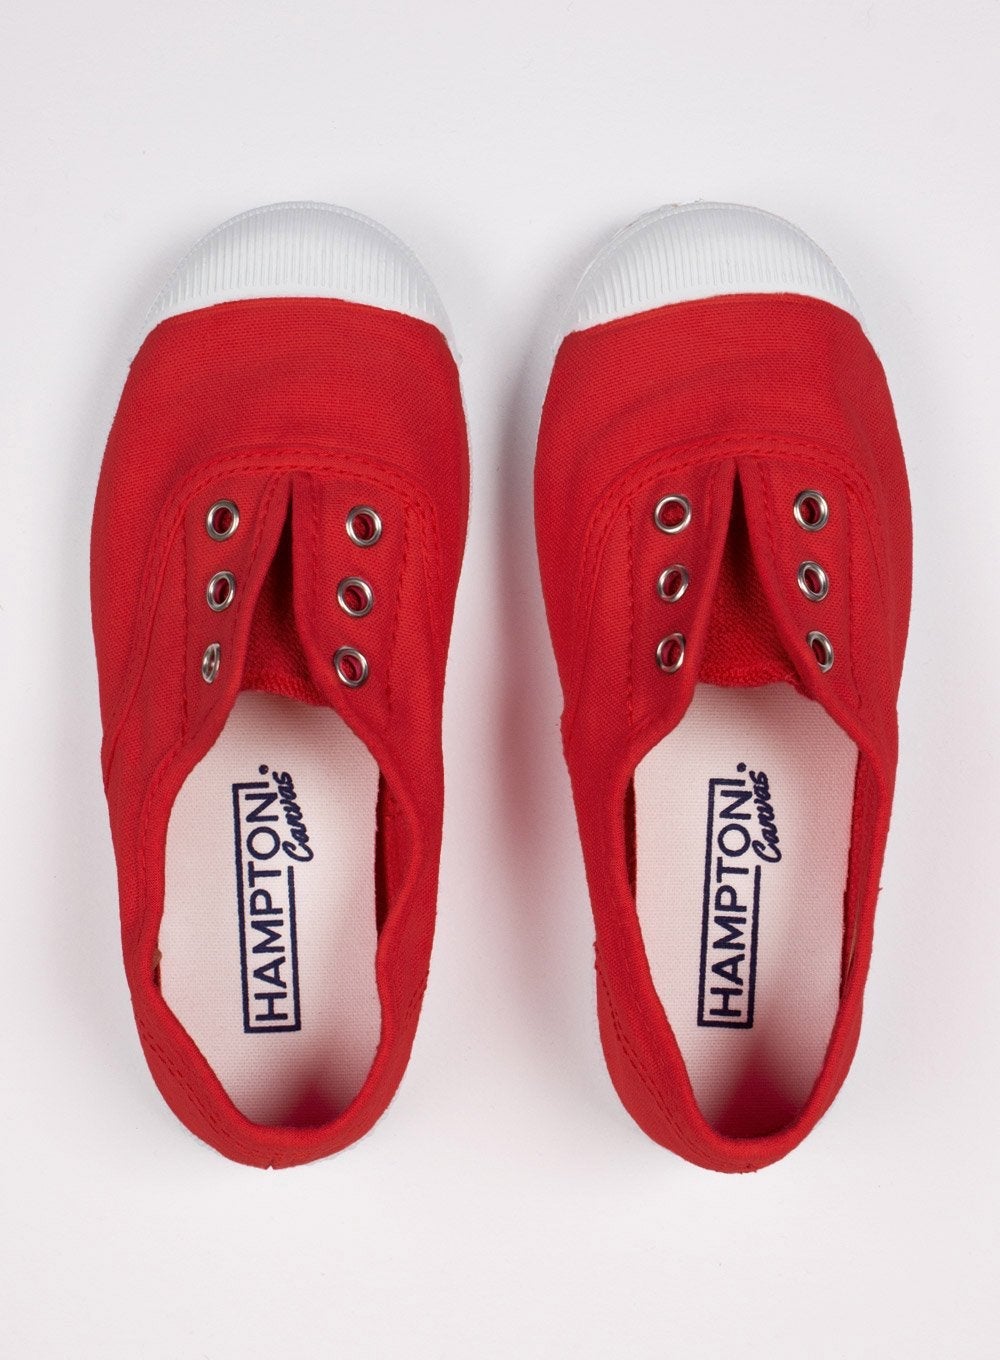 Hampton Canvas Canvas Shoes Hampton Canvas Plum Plimsolls in Red - Trotters Childrenswear